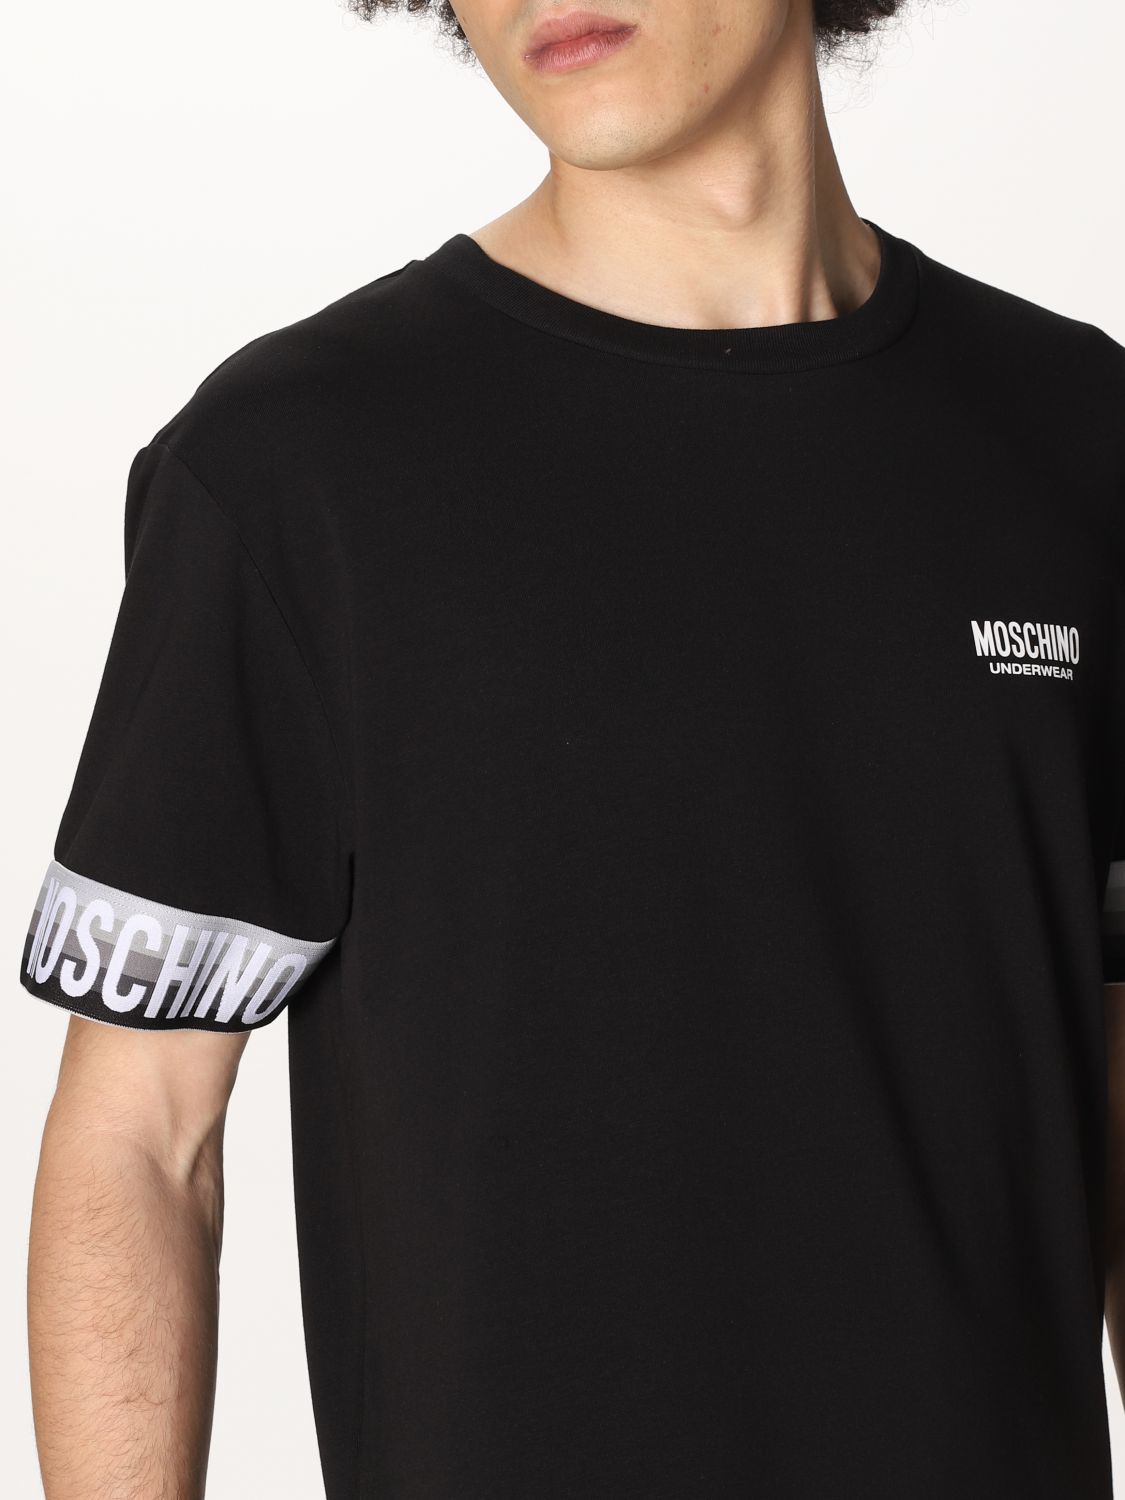 MOSCHINO UNDERWEAR: t-shirt with logo - Black | T-Shirt Moschino ...